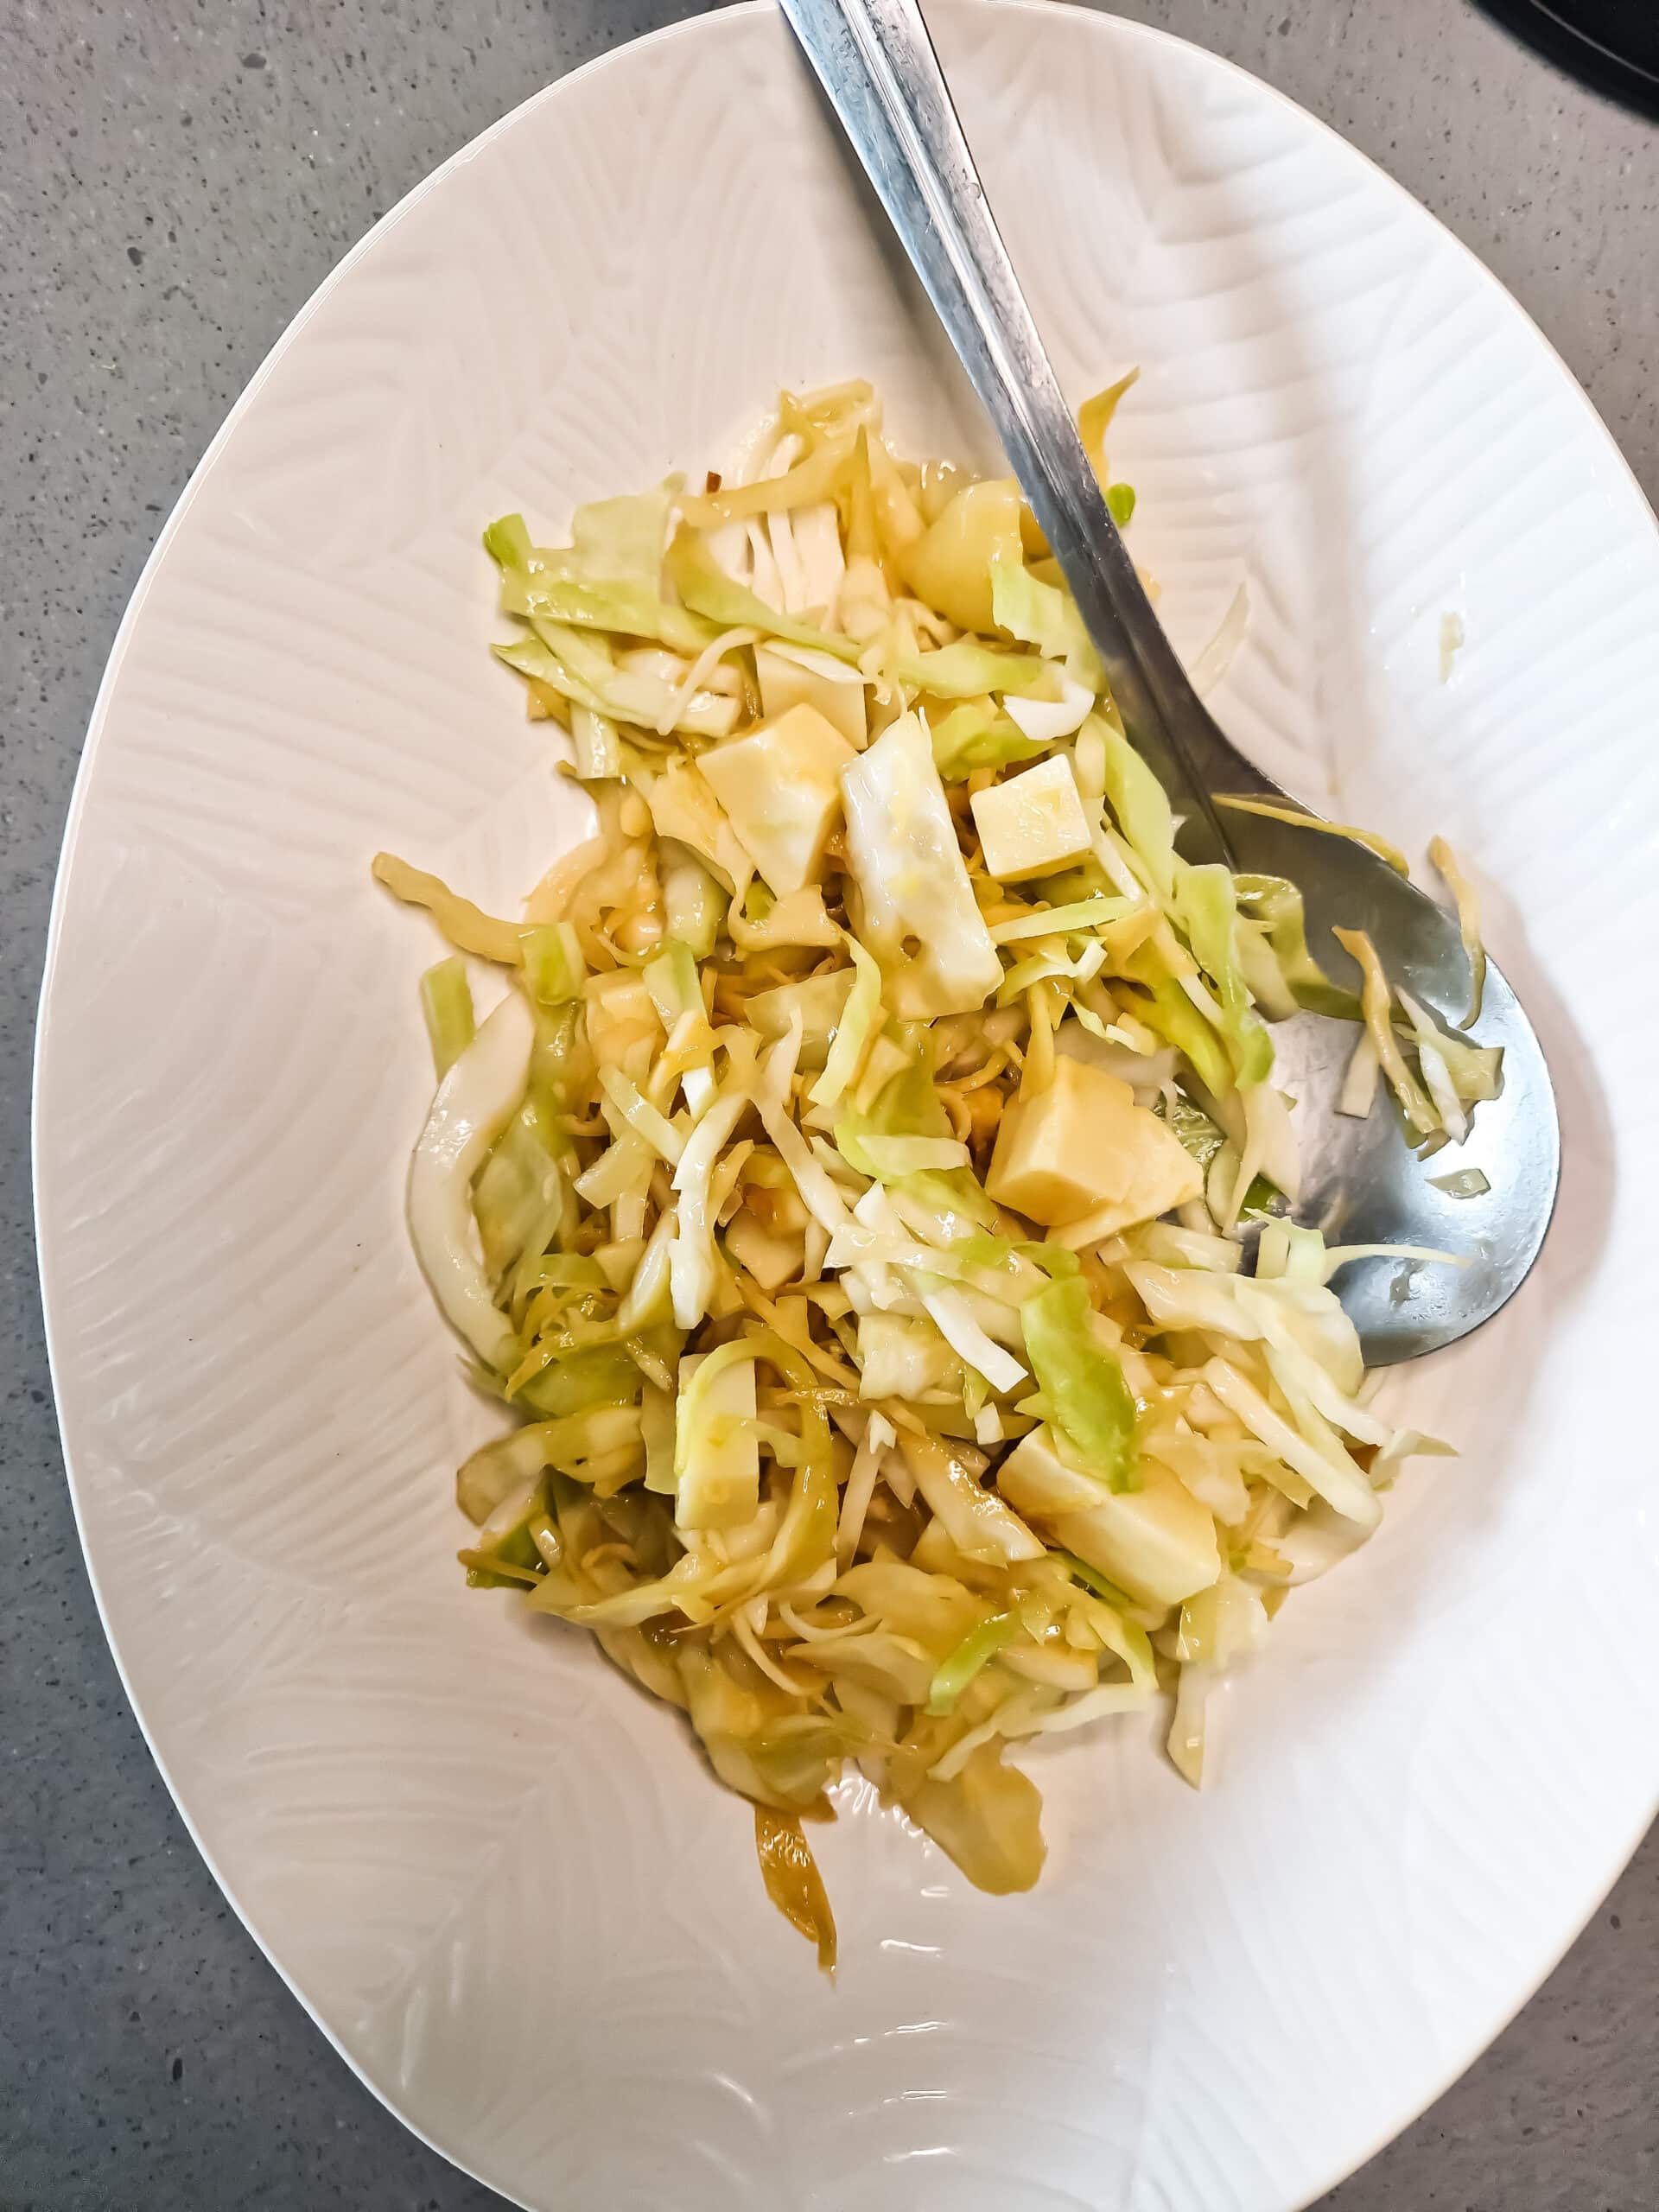 Immune-boosting cabbage salad